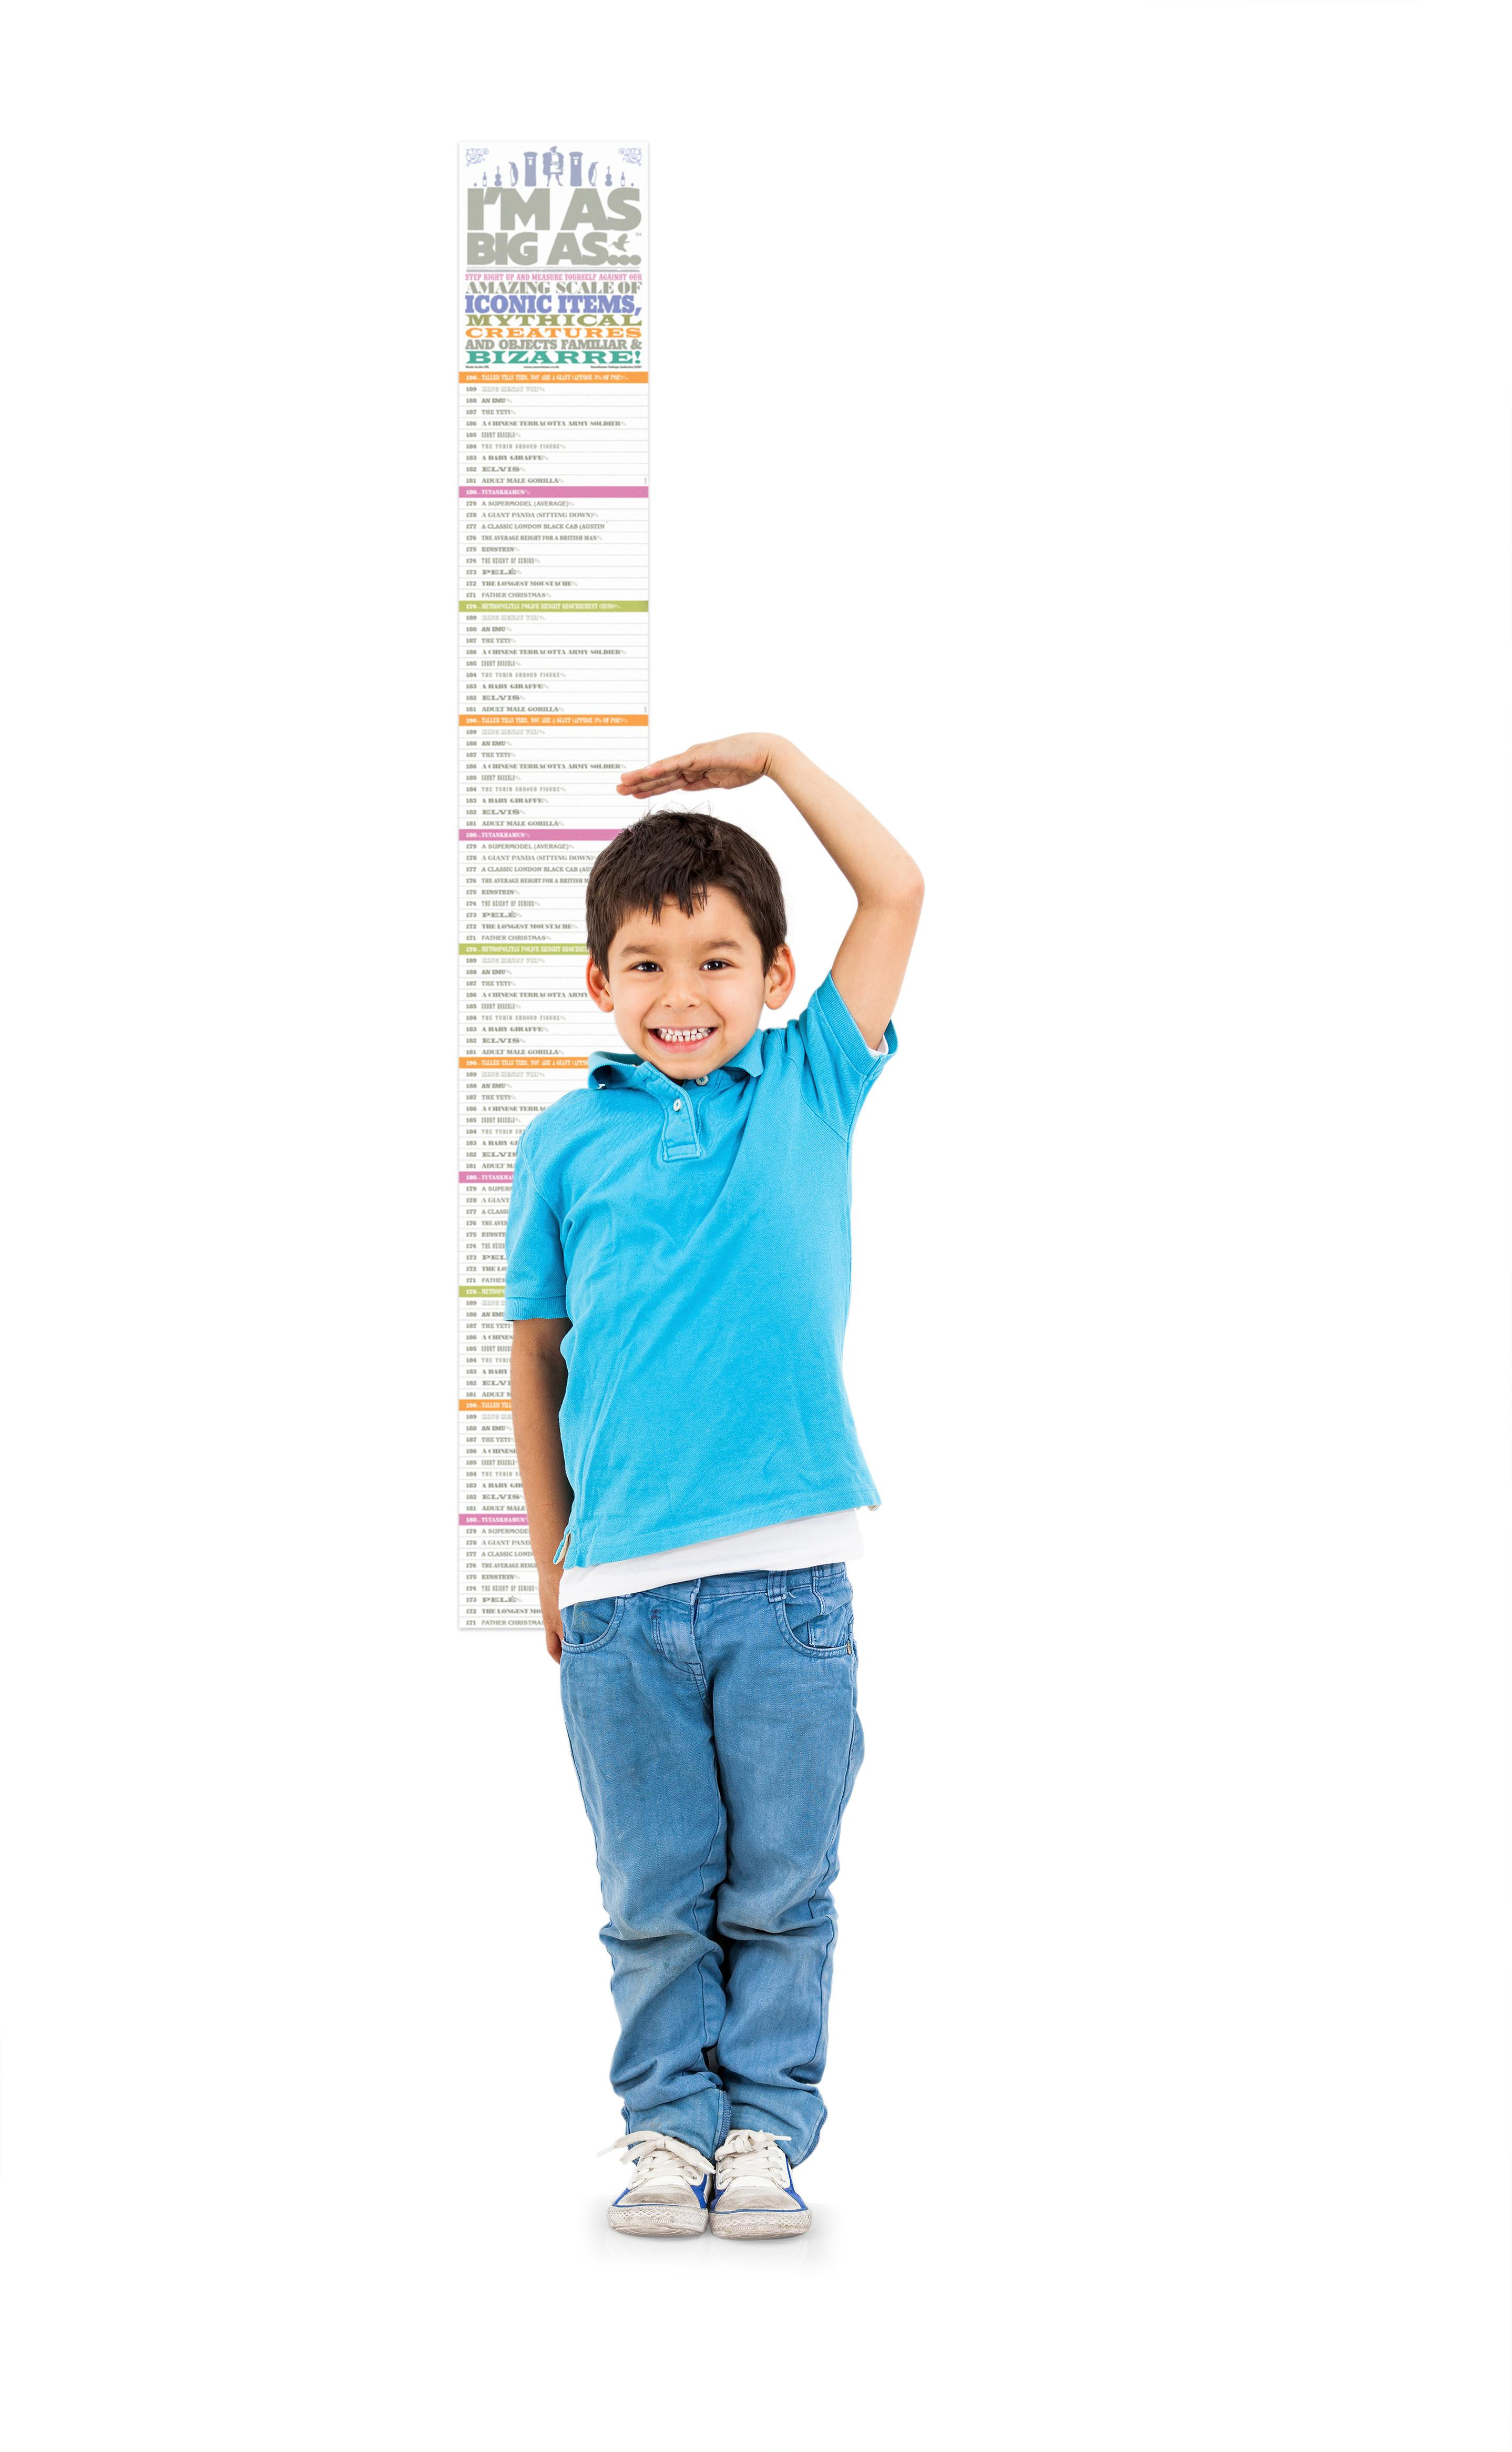 Child height. Человек измеряет рост. Measuring children's height. Height growth. Врач измеряет рост ребенка.